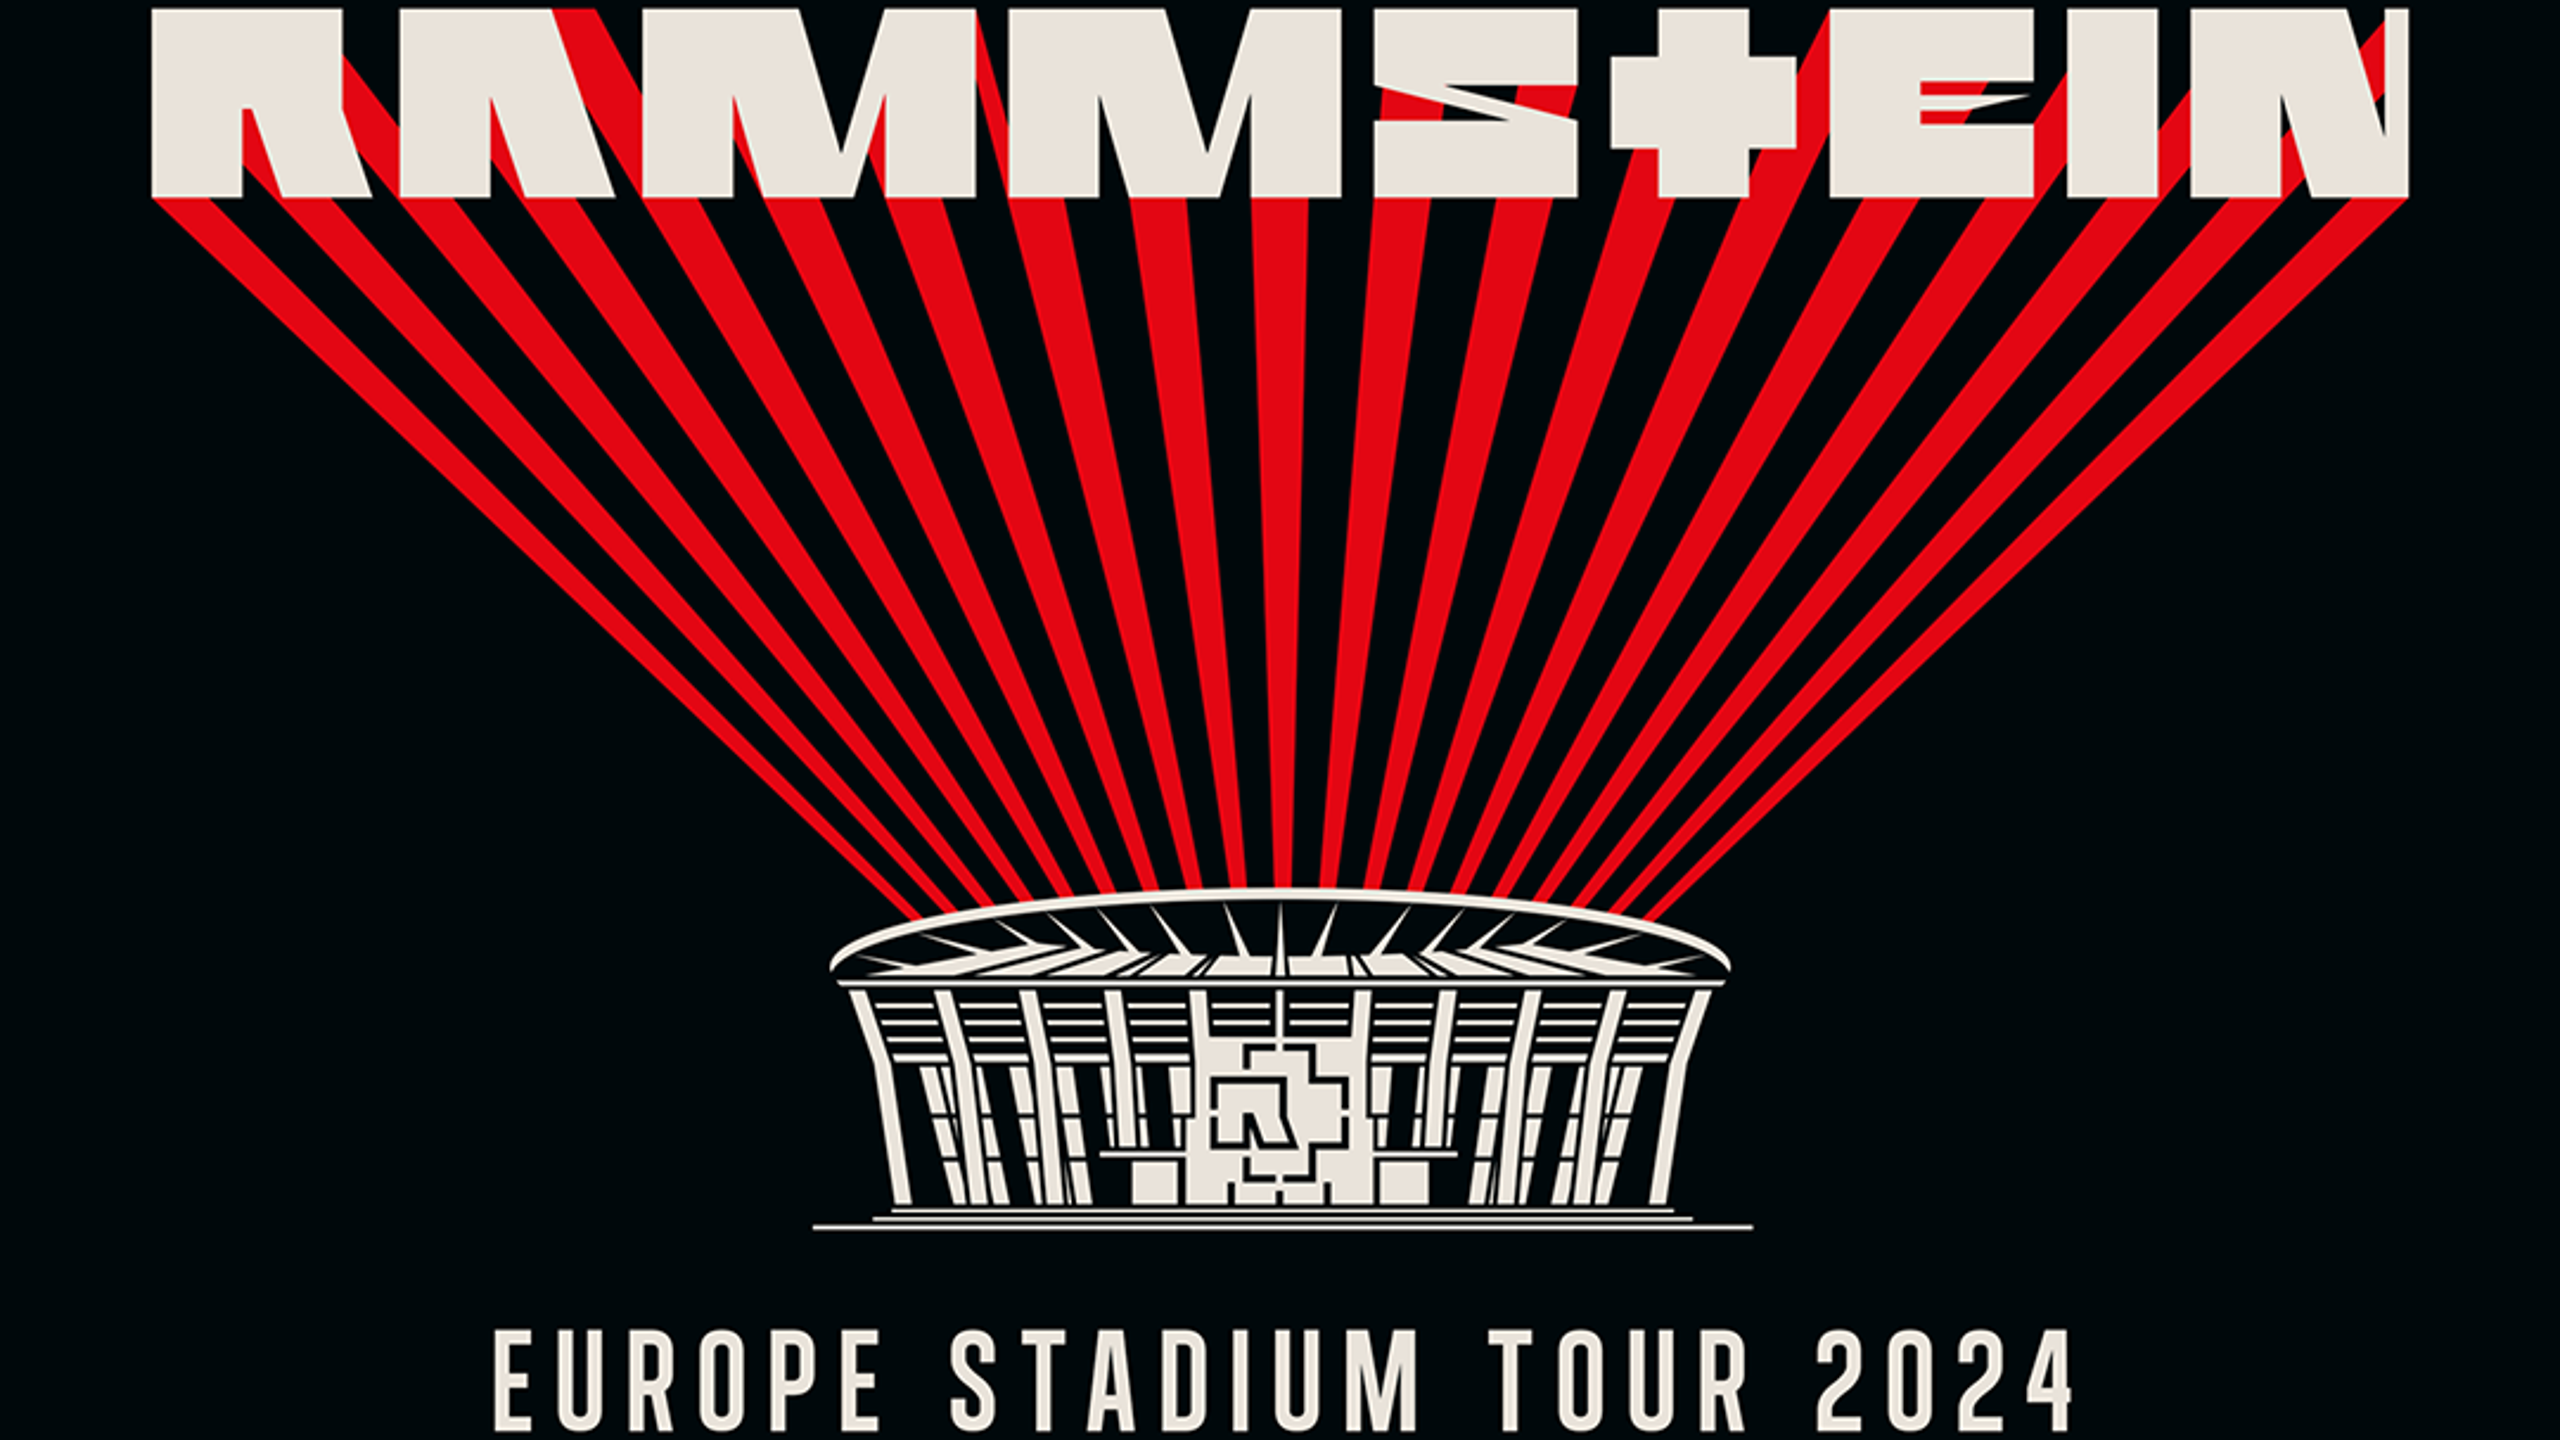 rammstein tour usa tickets